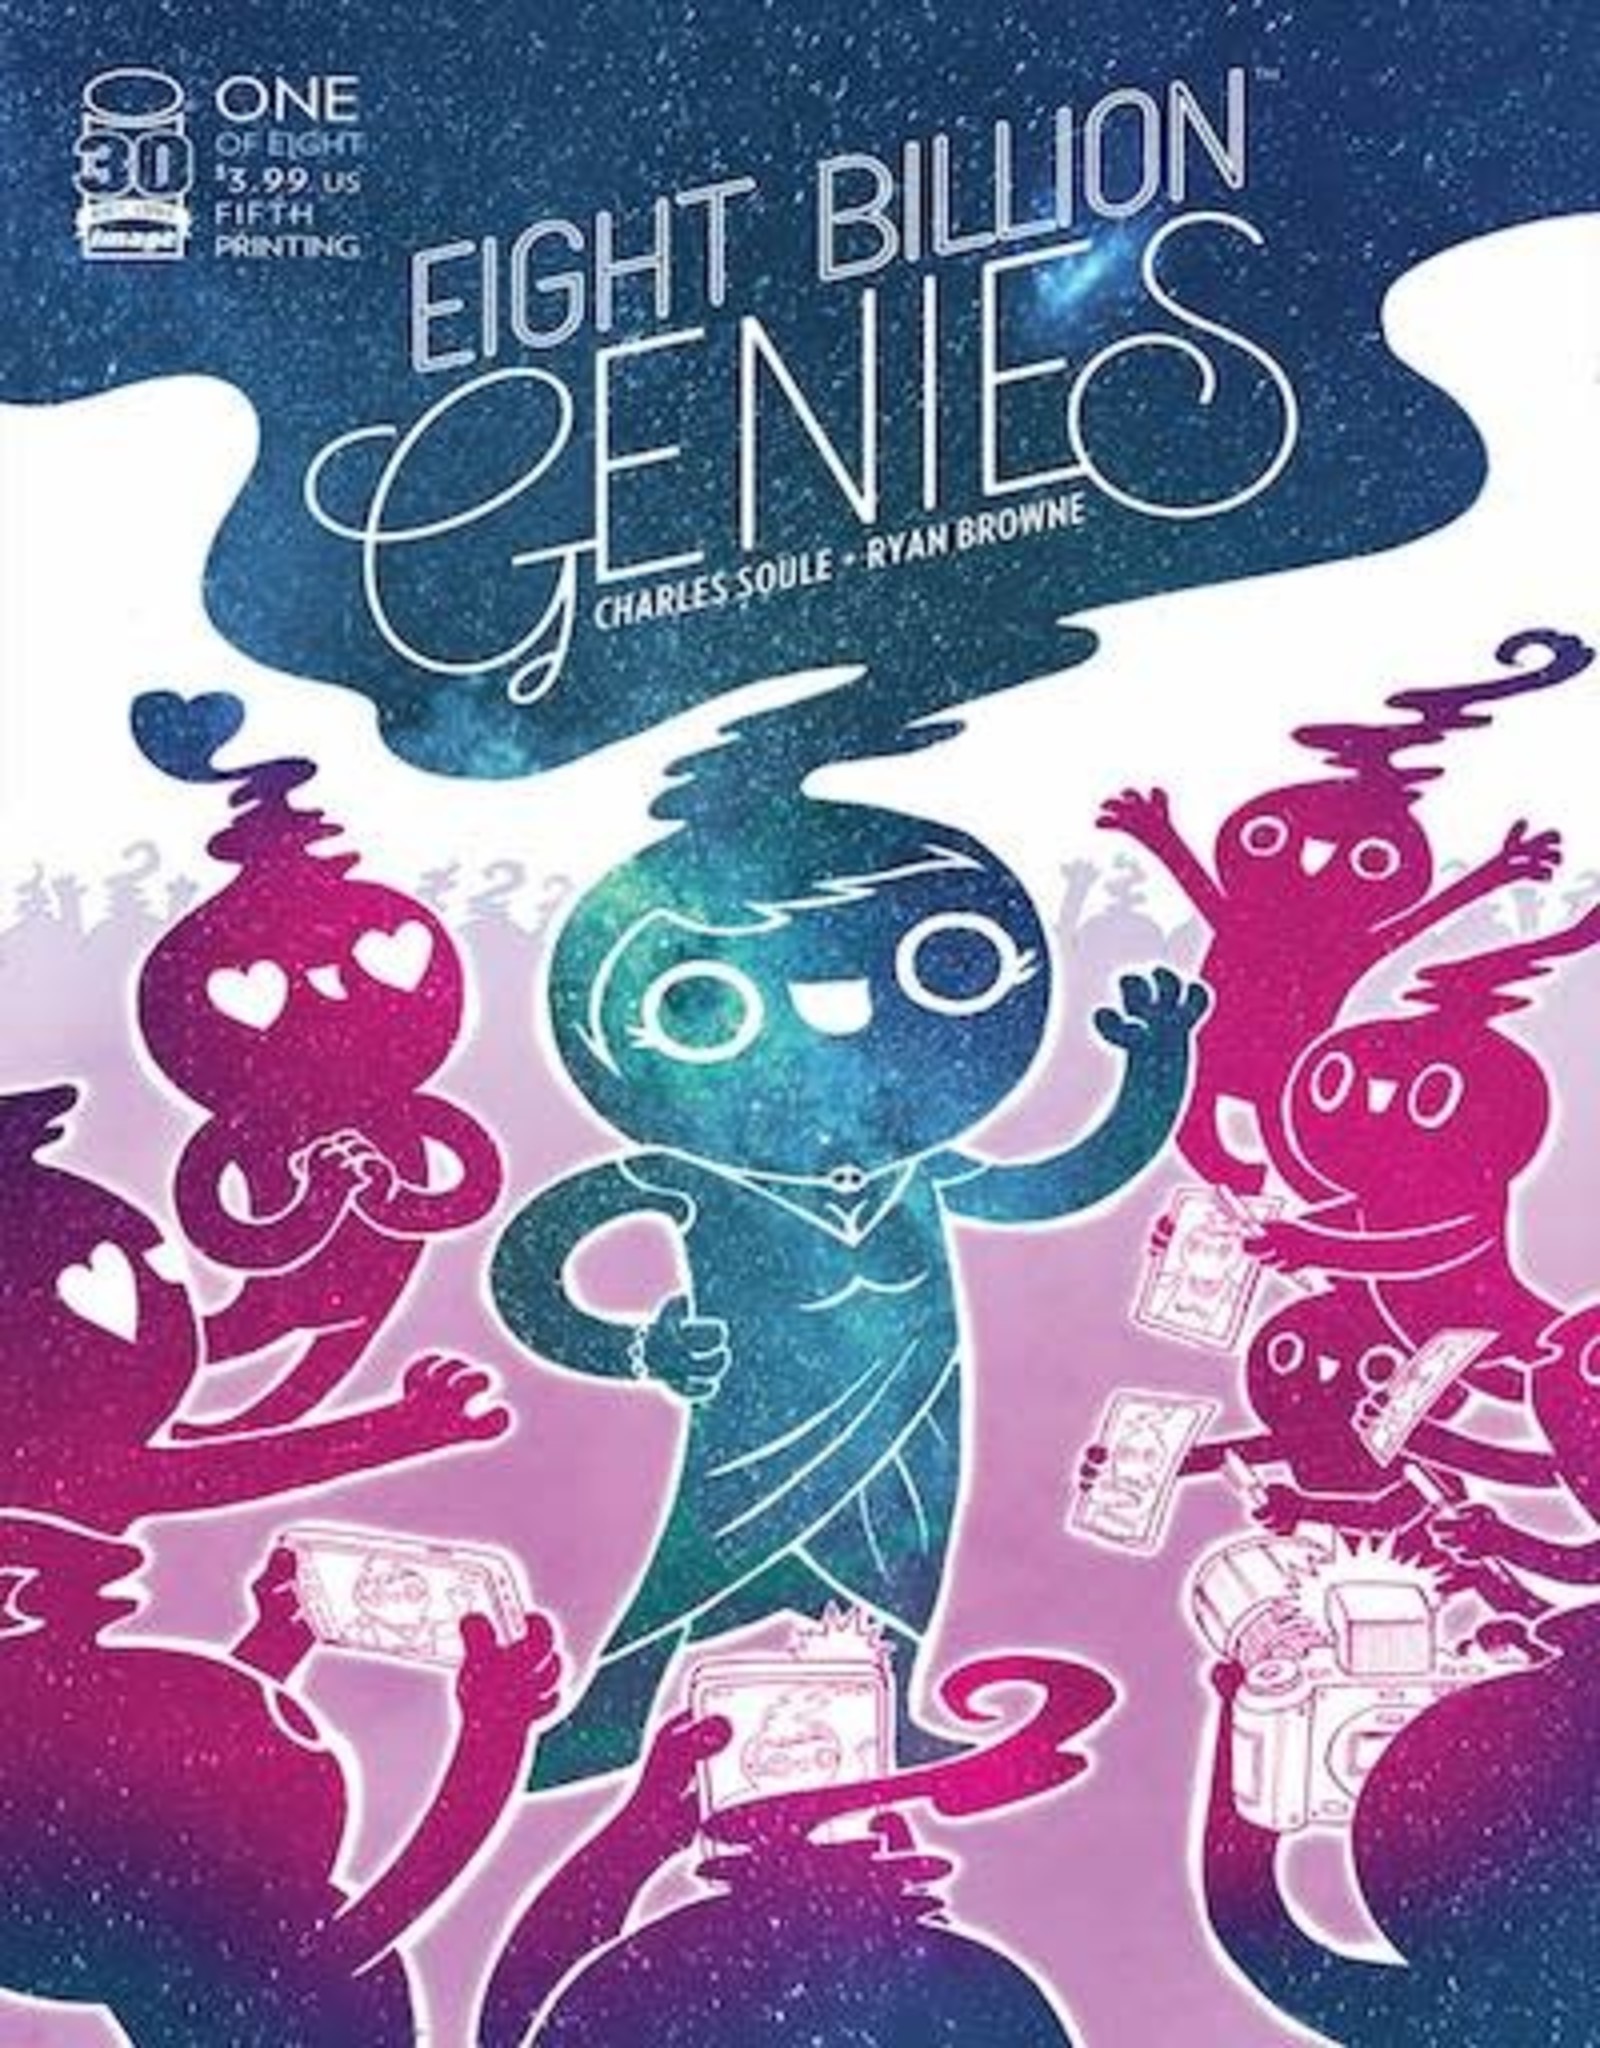 Image Comics Eight Billion Genies #1 5th Ptg